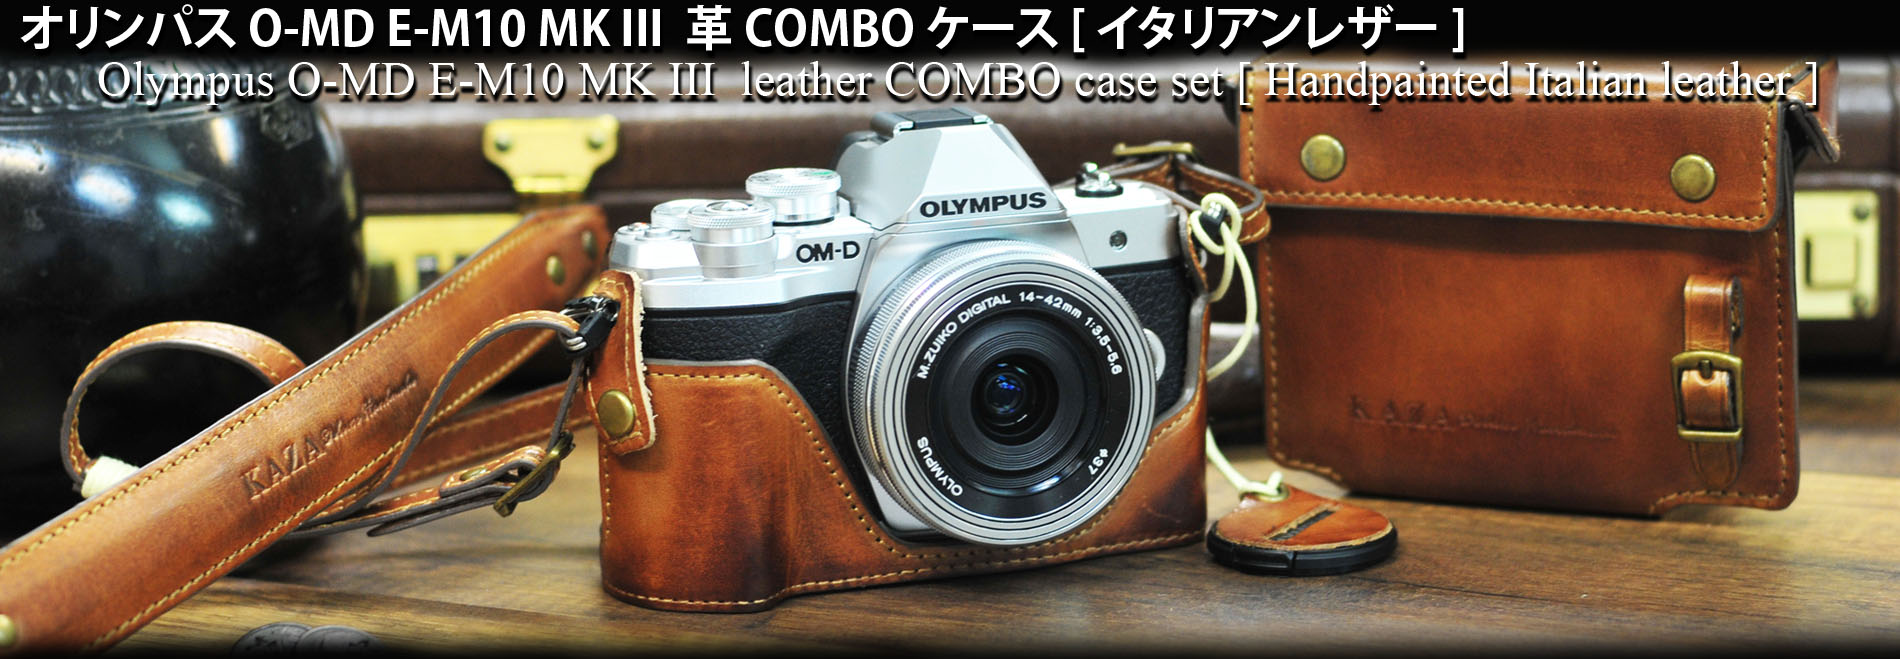 Olympus OM-D E-M10 mark iii 相機皮套 Leather case オリンパスOM-D E-M10 mk3 カメラケース by KAZA